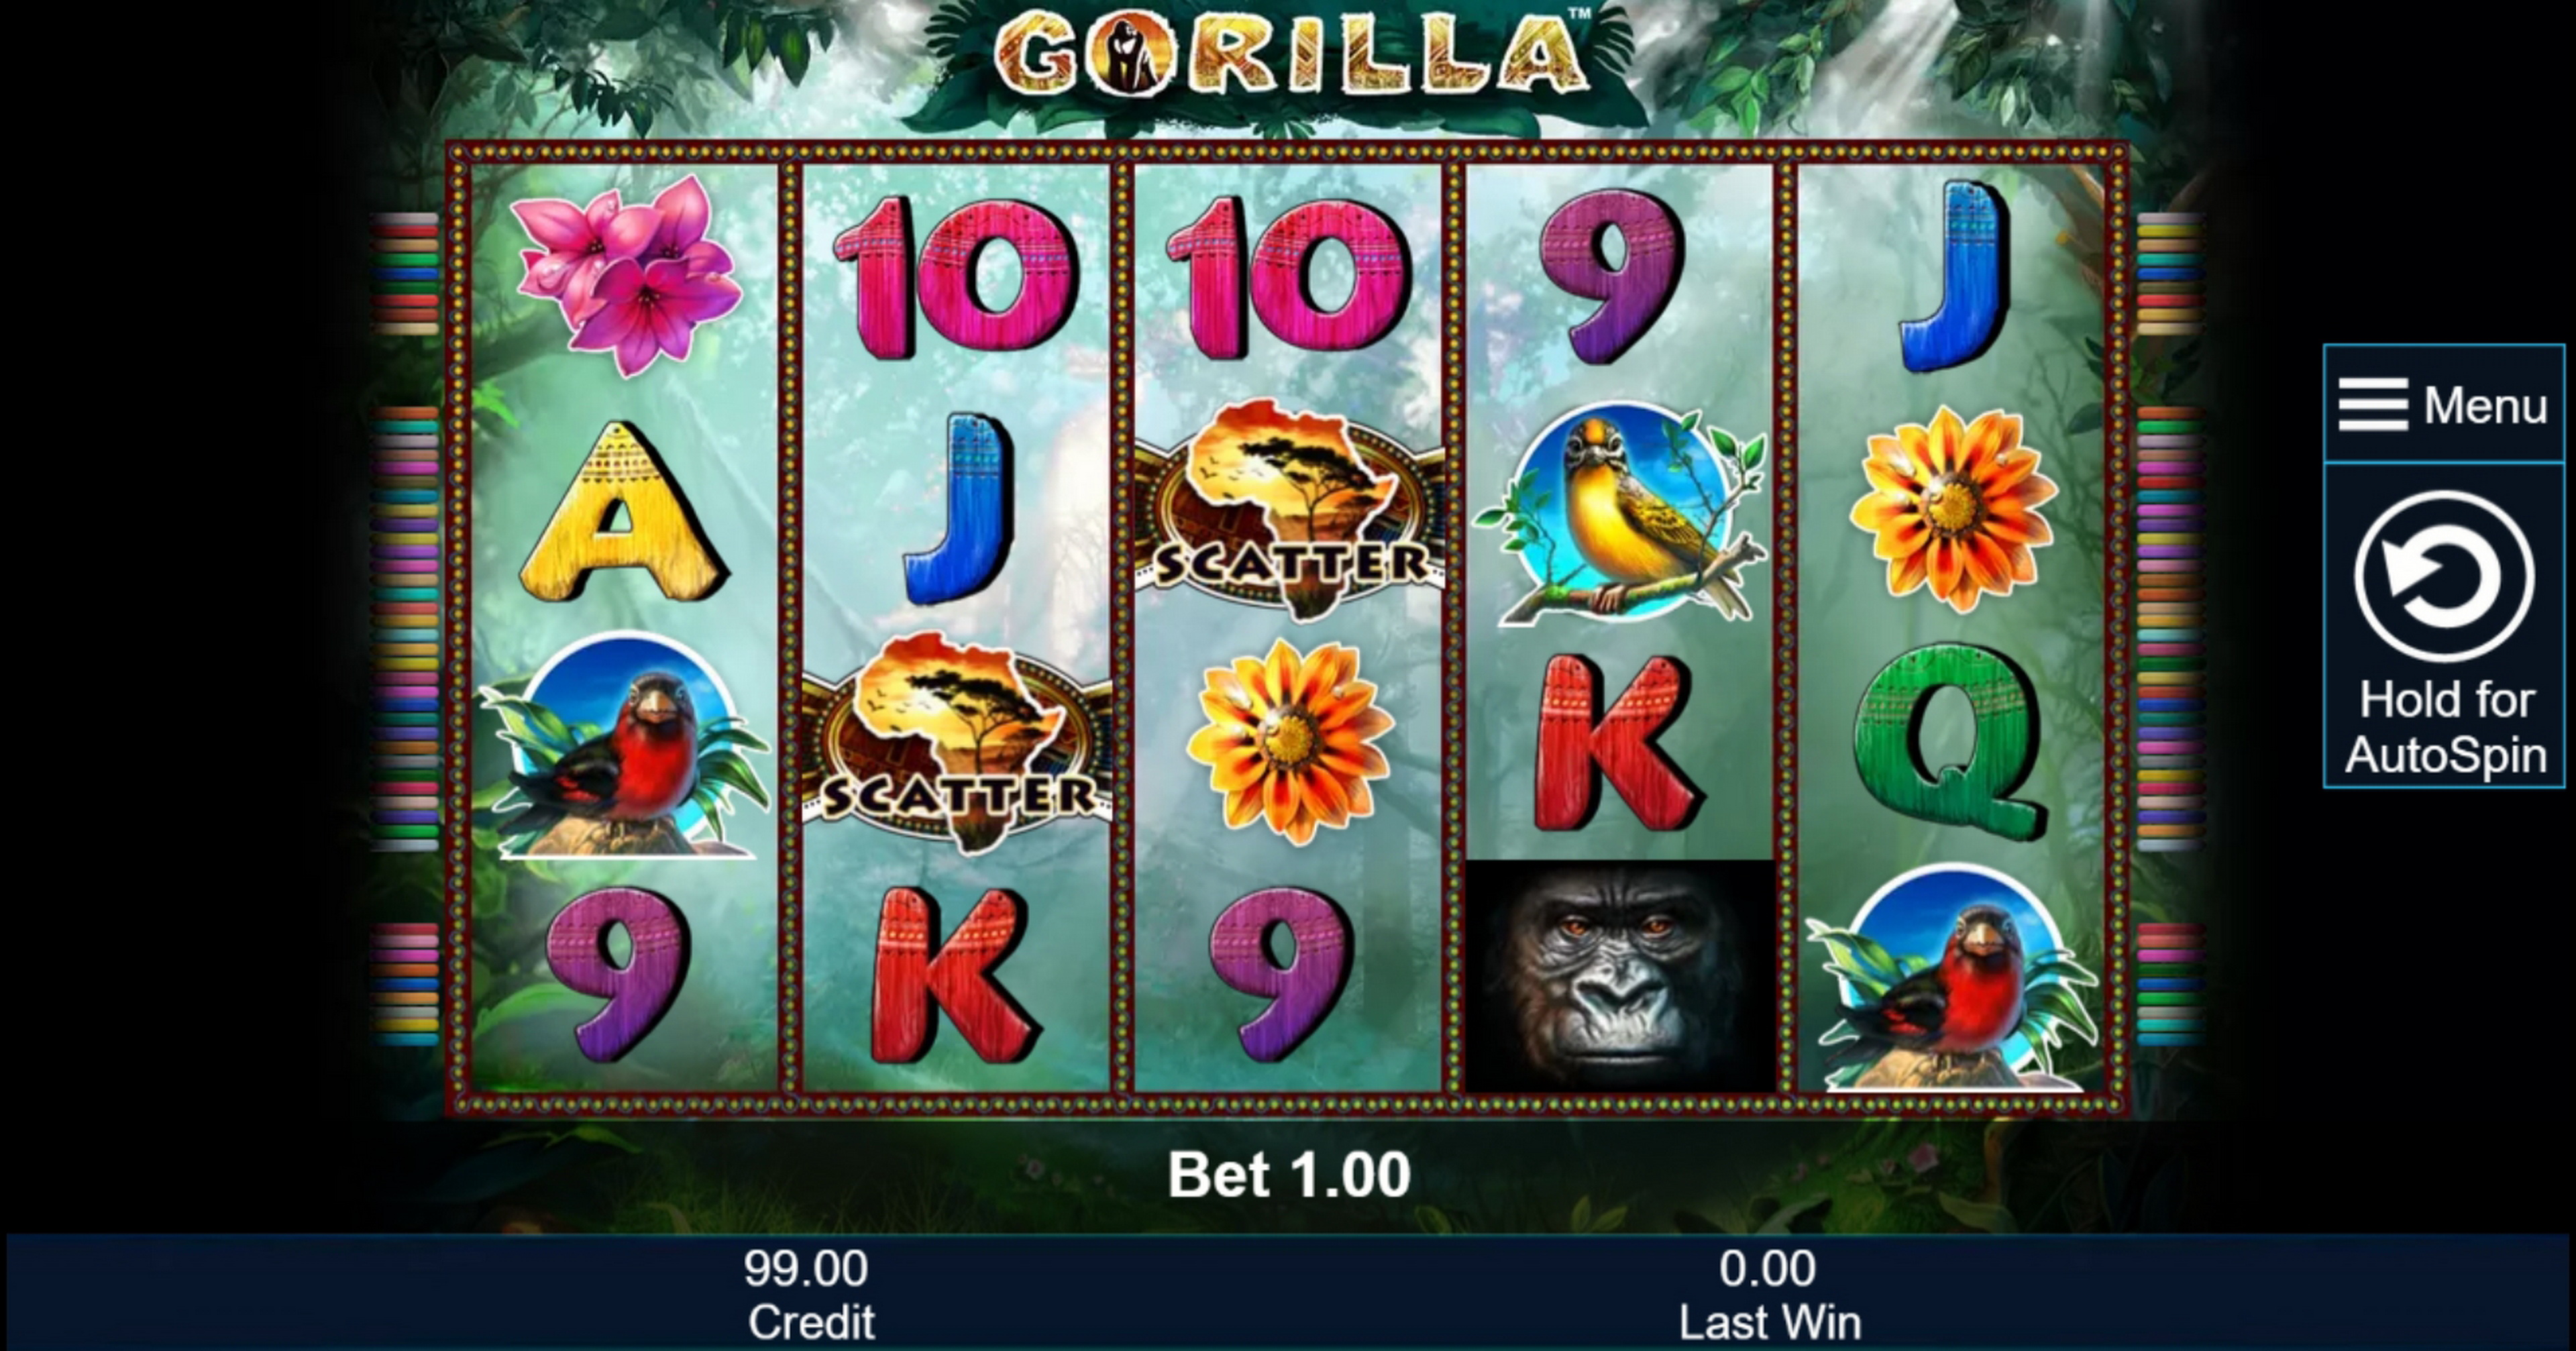 Reels in Gorilla Slot Game by Greentube